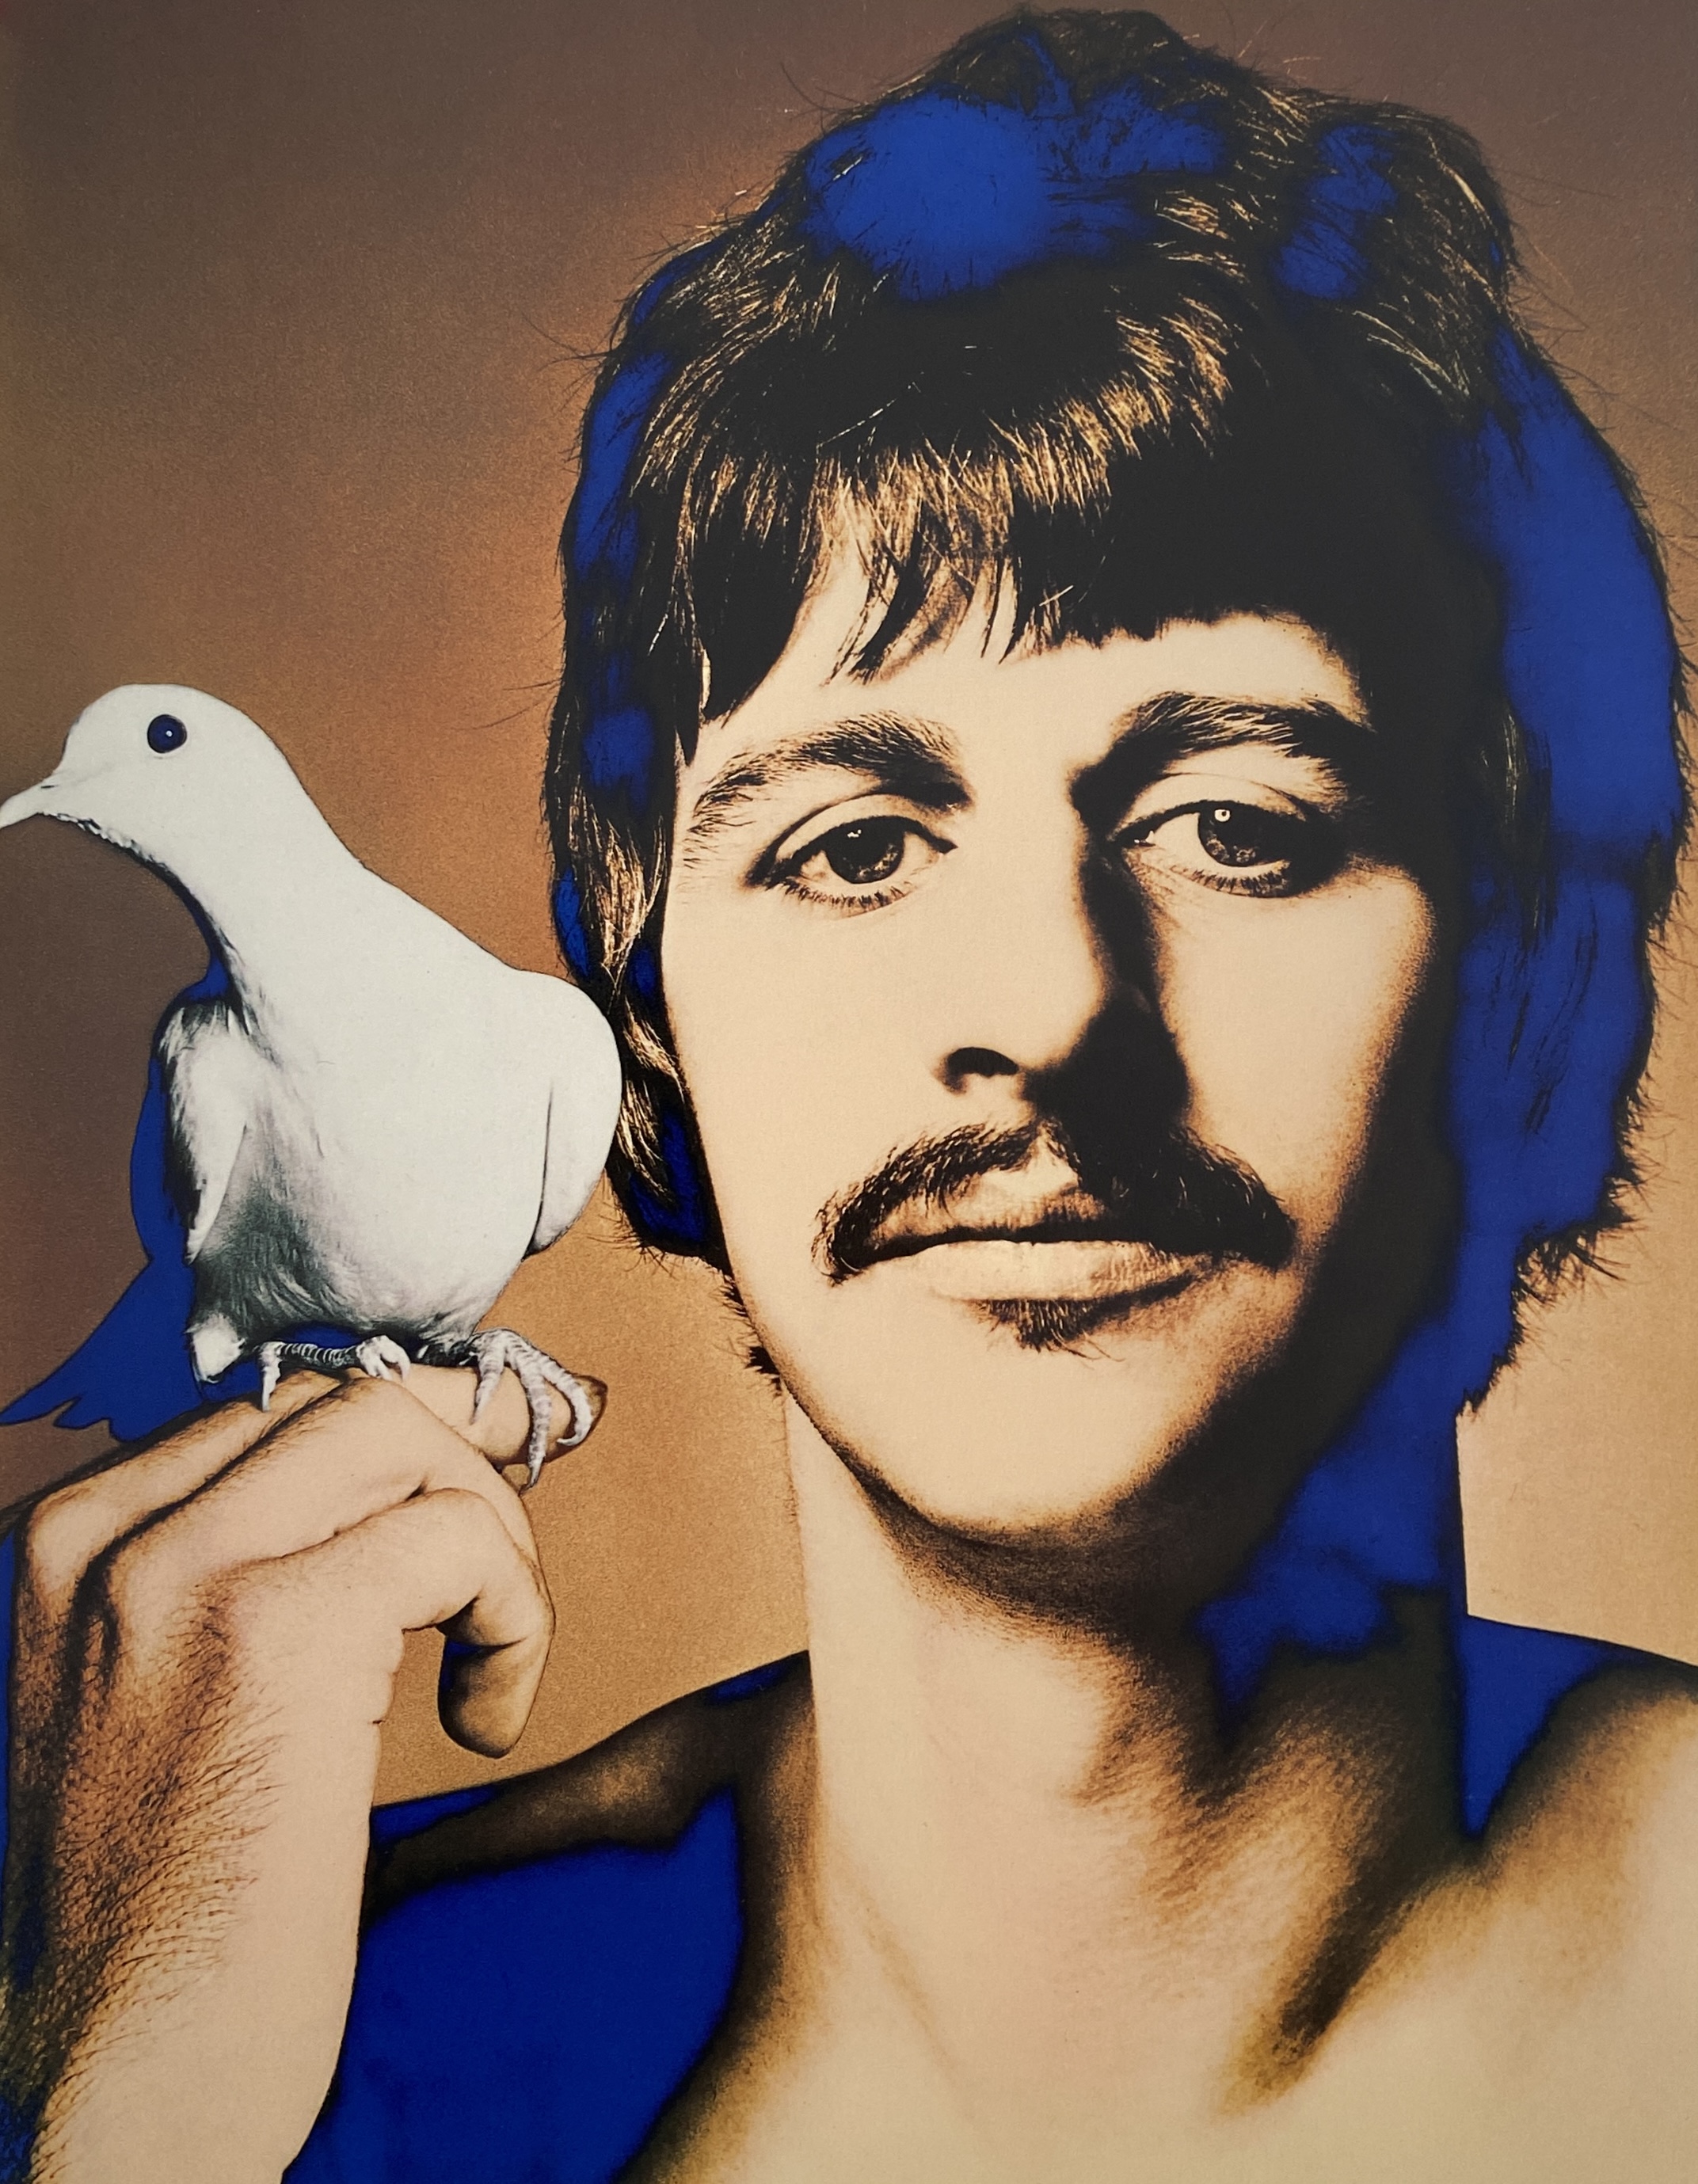 Richard Avedon - Ringo Starr, The Beatles